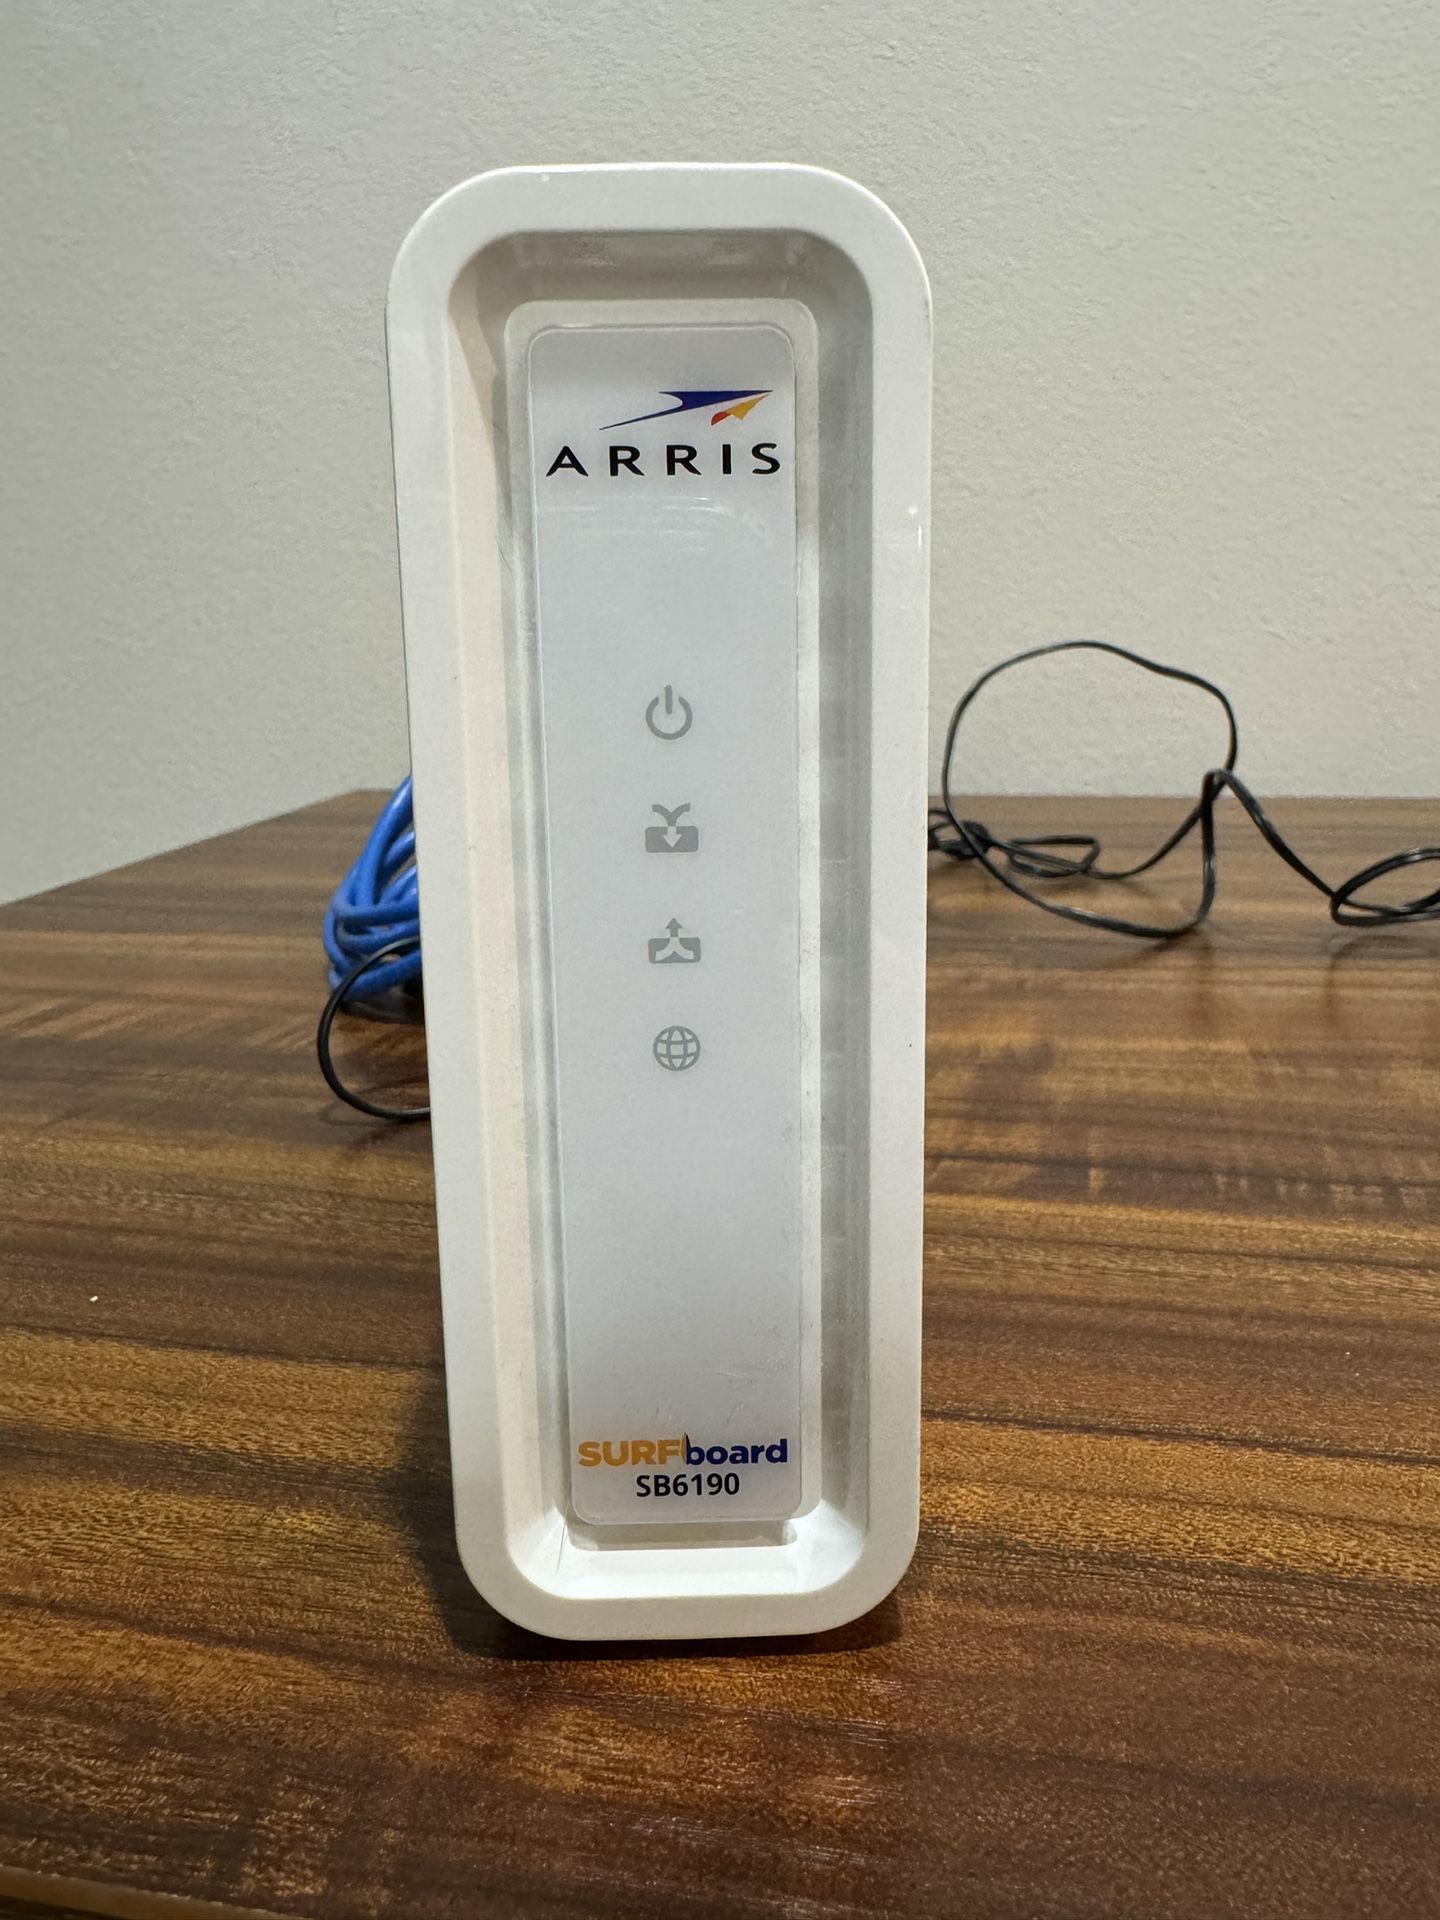 ARRIS modem SB6190